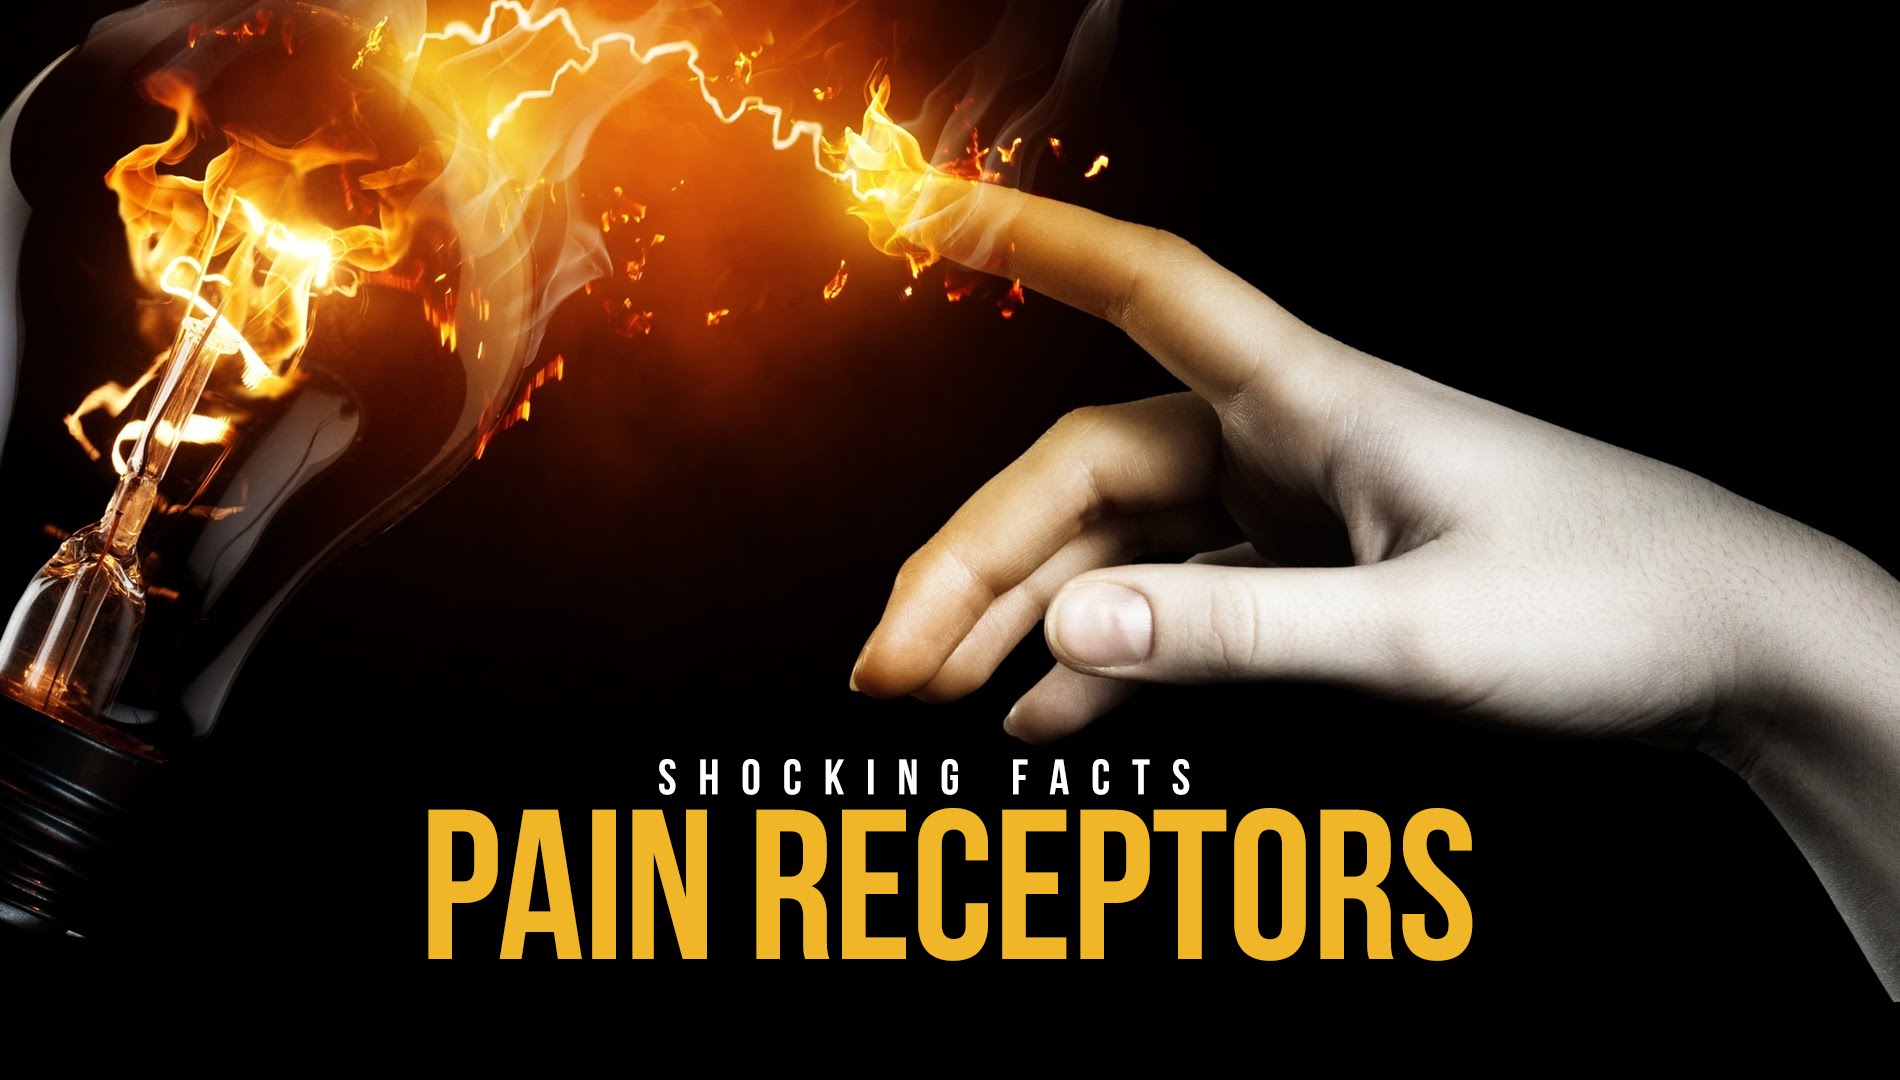 Pain Receptors - Shocking Facts